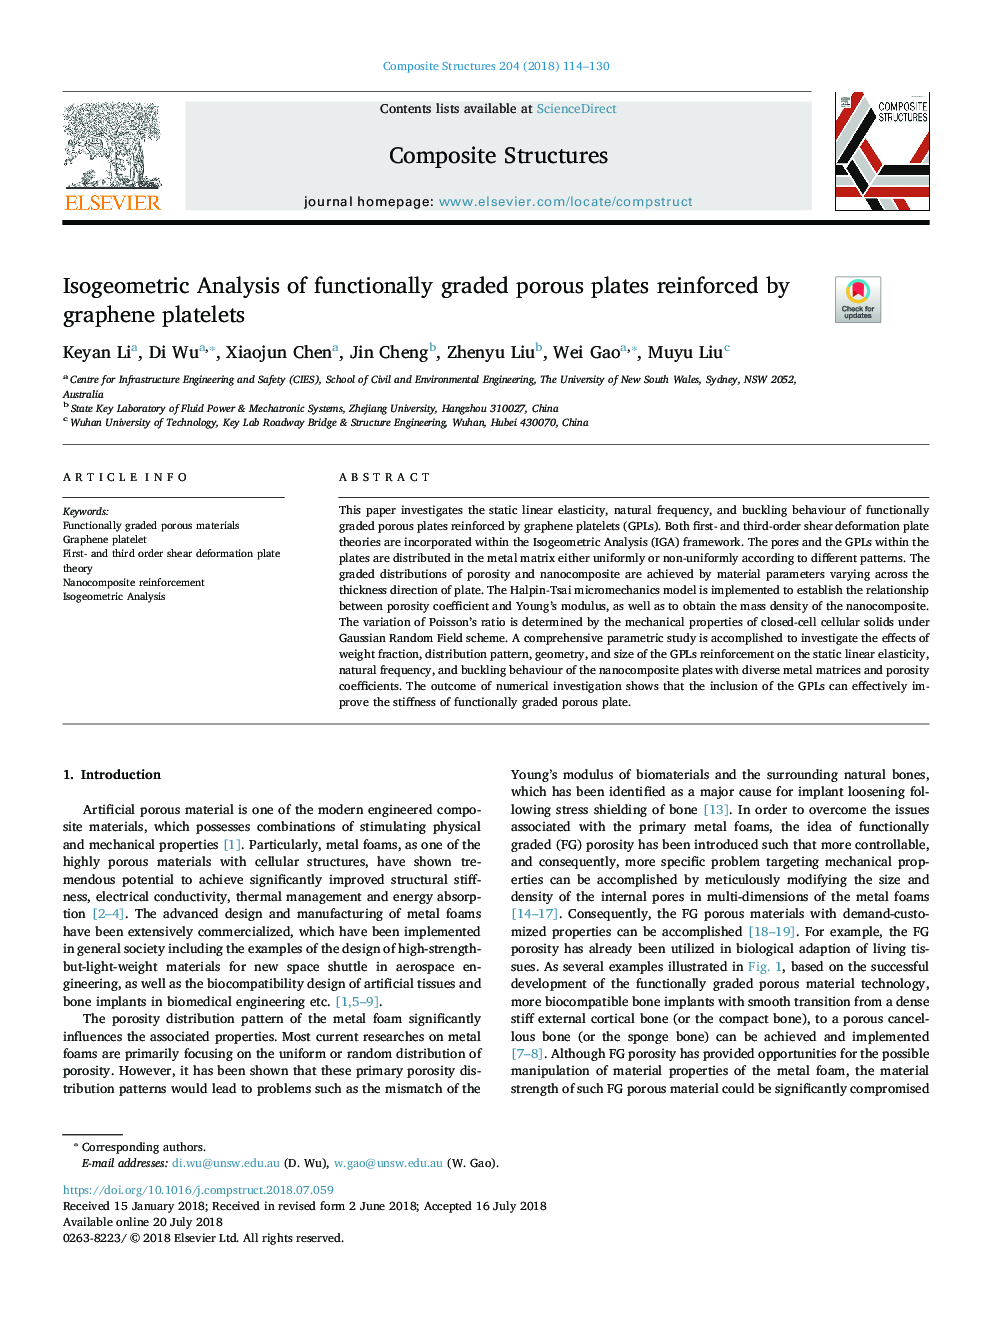 Isogeometric Analysis of functionally graded porous plates reinforced by graphene platelets